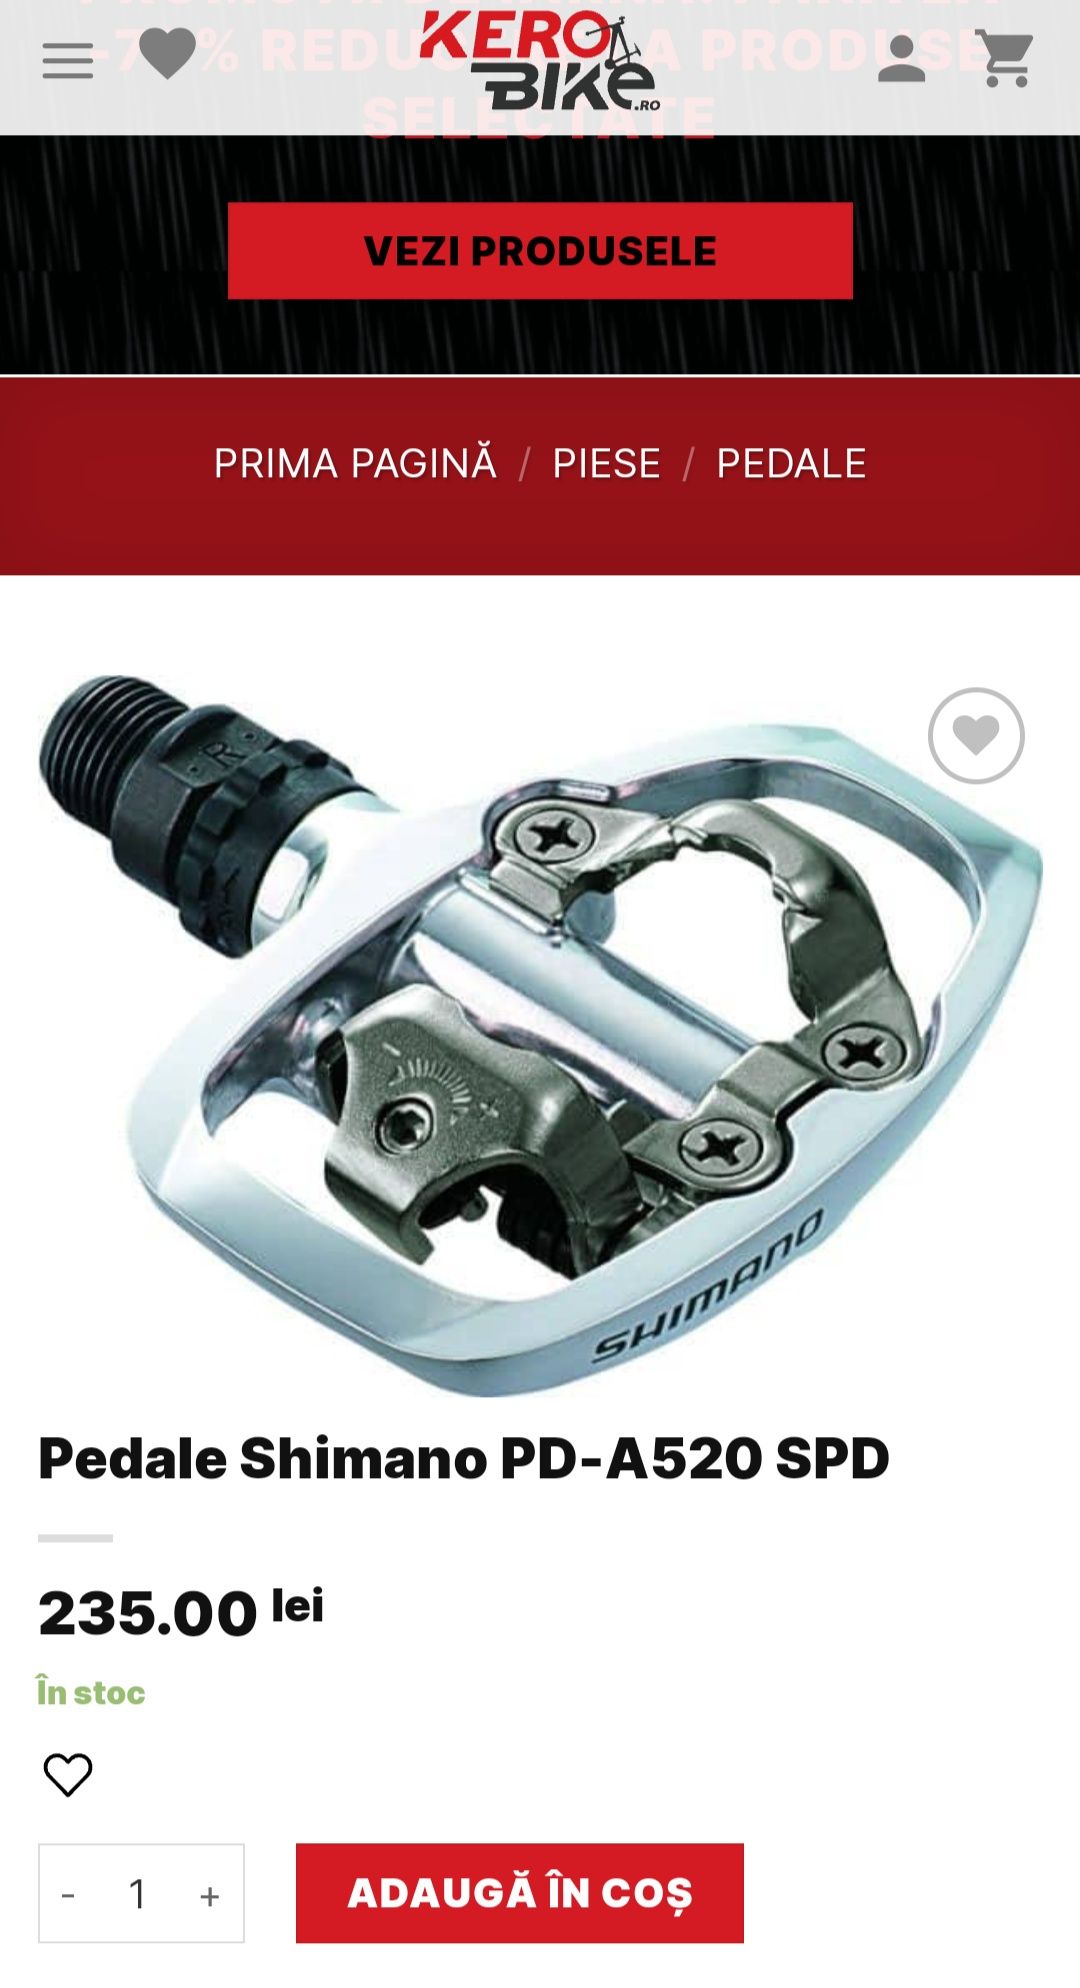 Pedale/Platformă/Shimano/ SPD Shimano/Tiagra pd-a520/Bicicleta/Placute